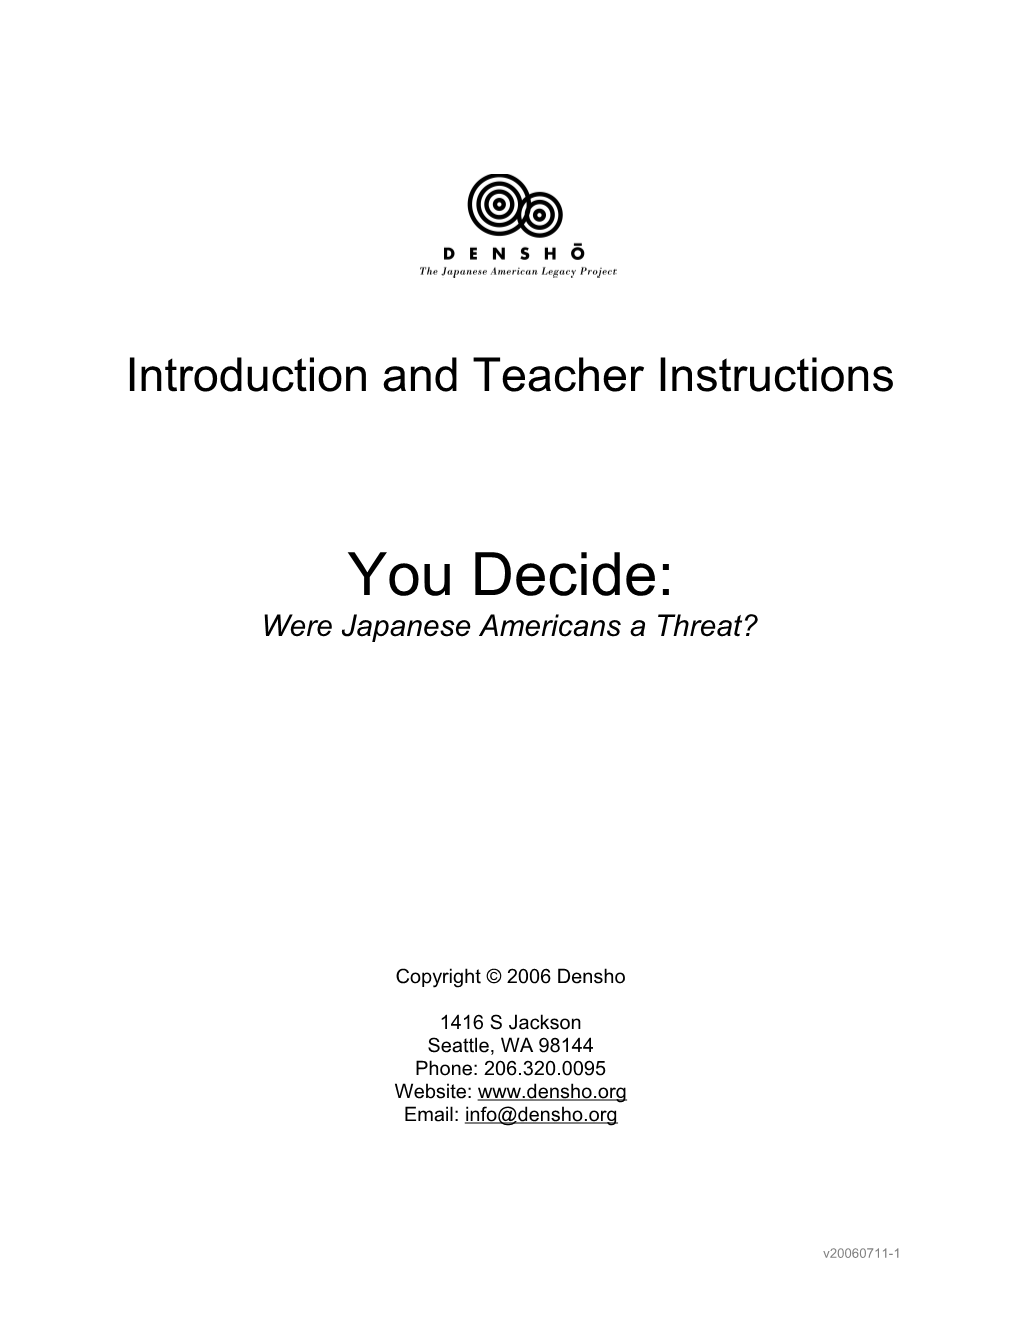 Densho Civil Liberties Curriculum - You Decide: Were Japanese Americans a Threat? (Introduction